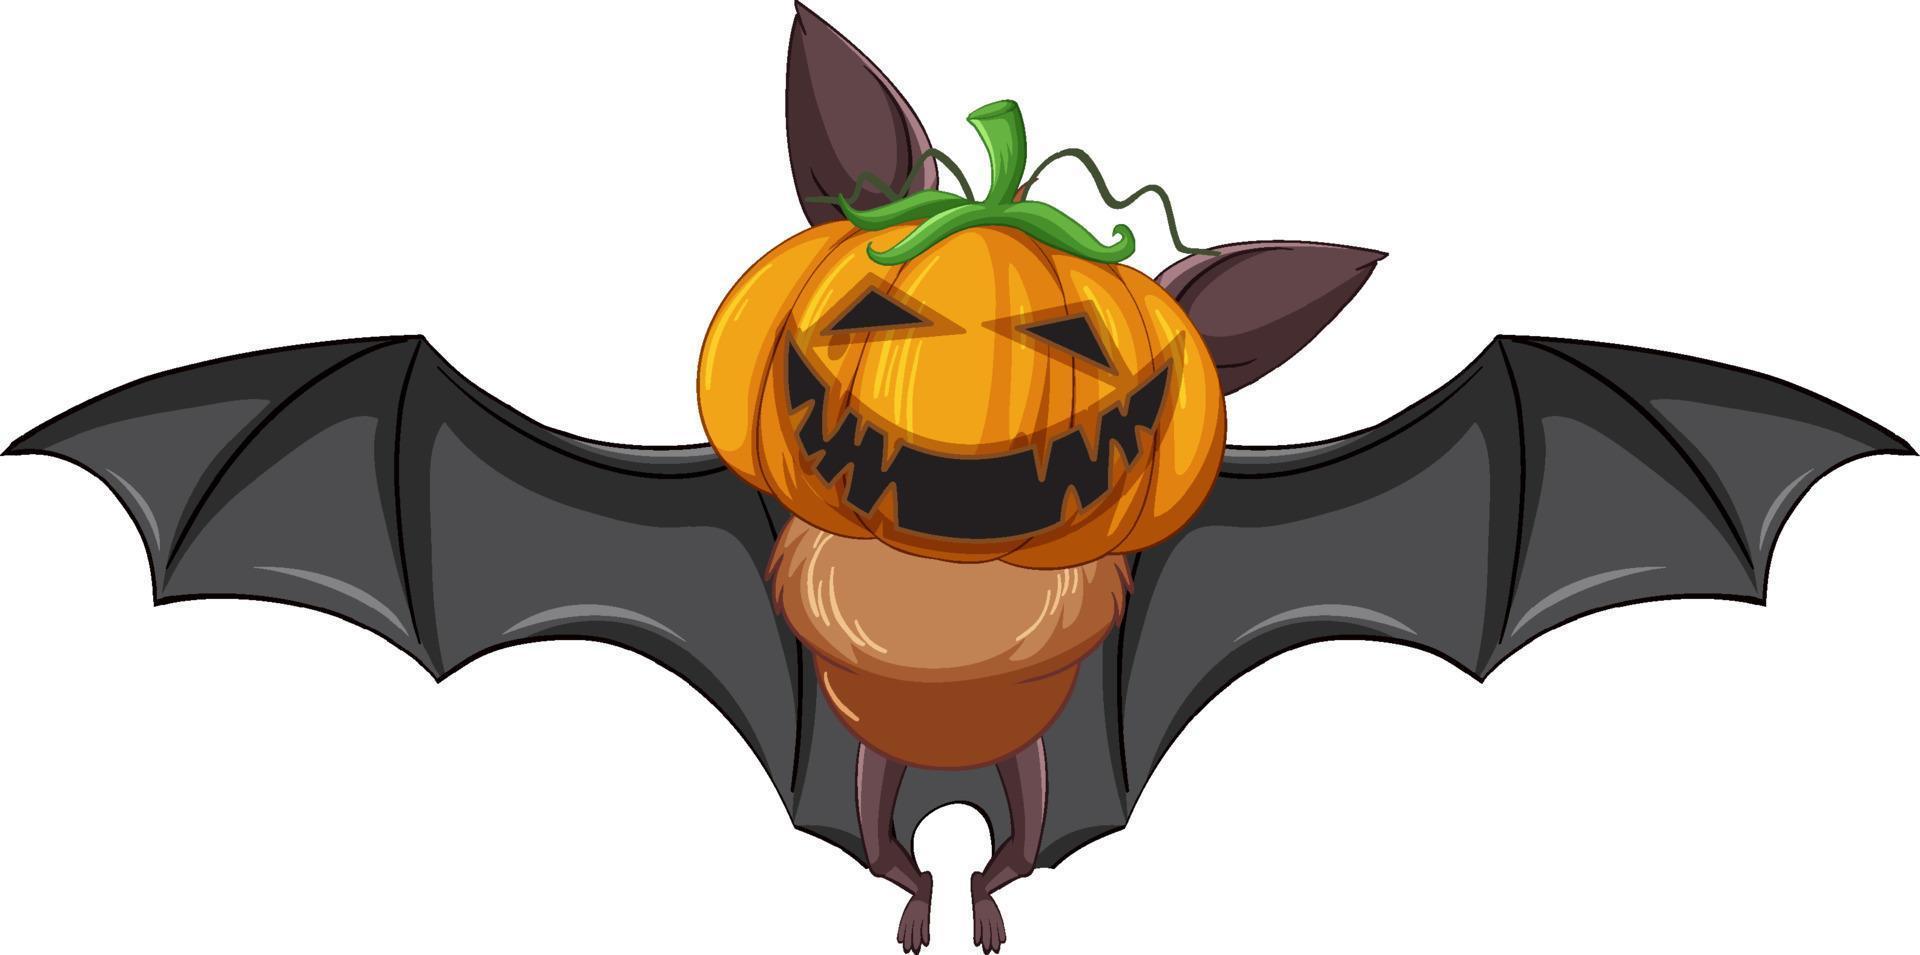 Cartoon bat with Jack-o'-lantern head on white background vector